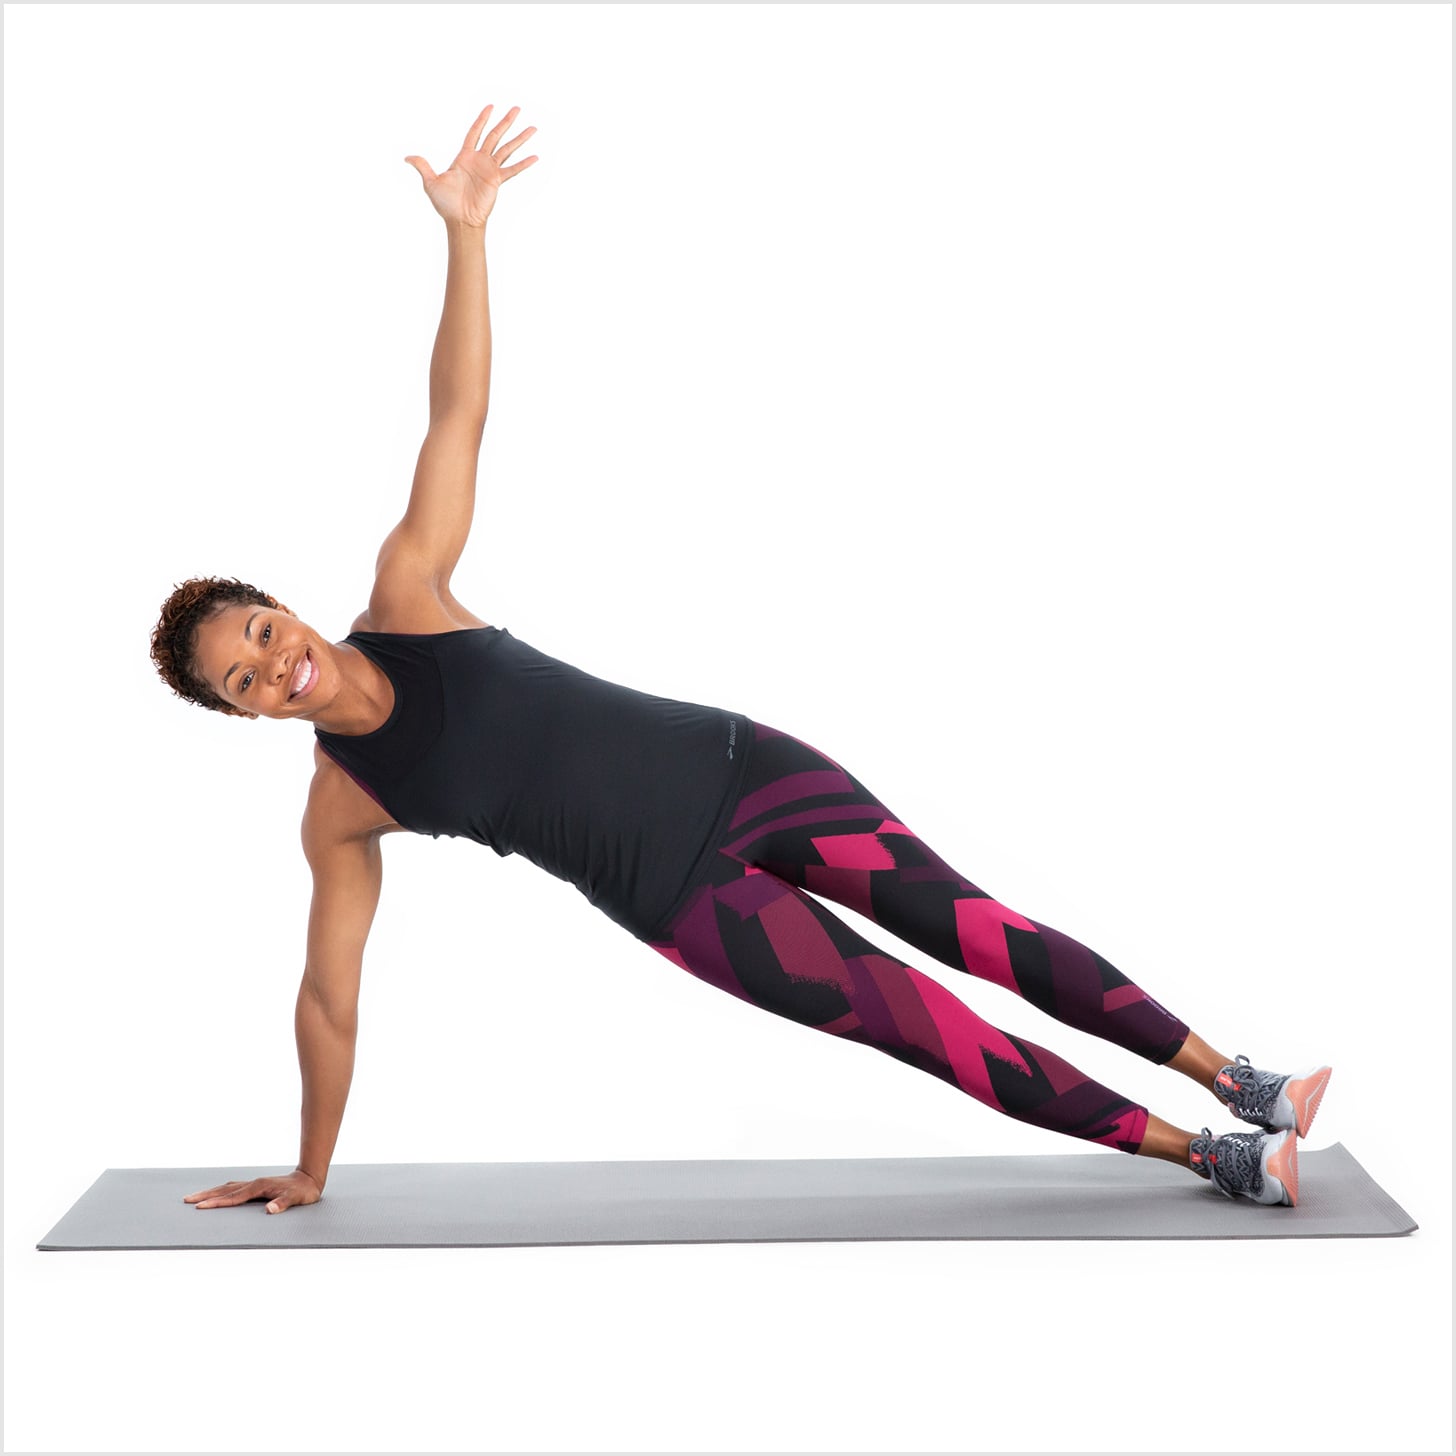 Customize Your Practice: 4 Plank Pose Alternatives